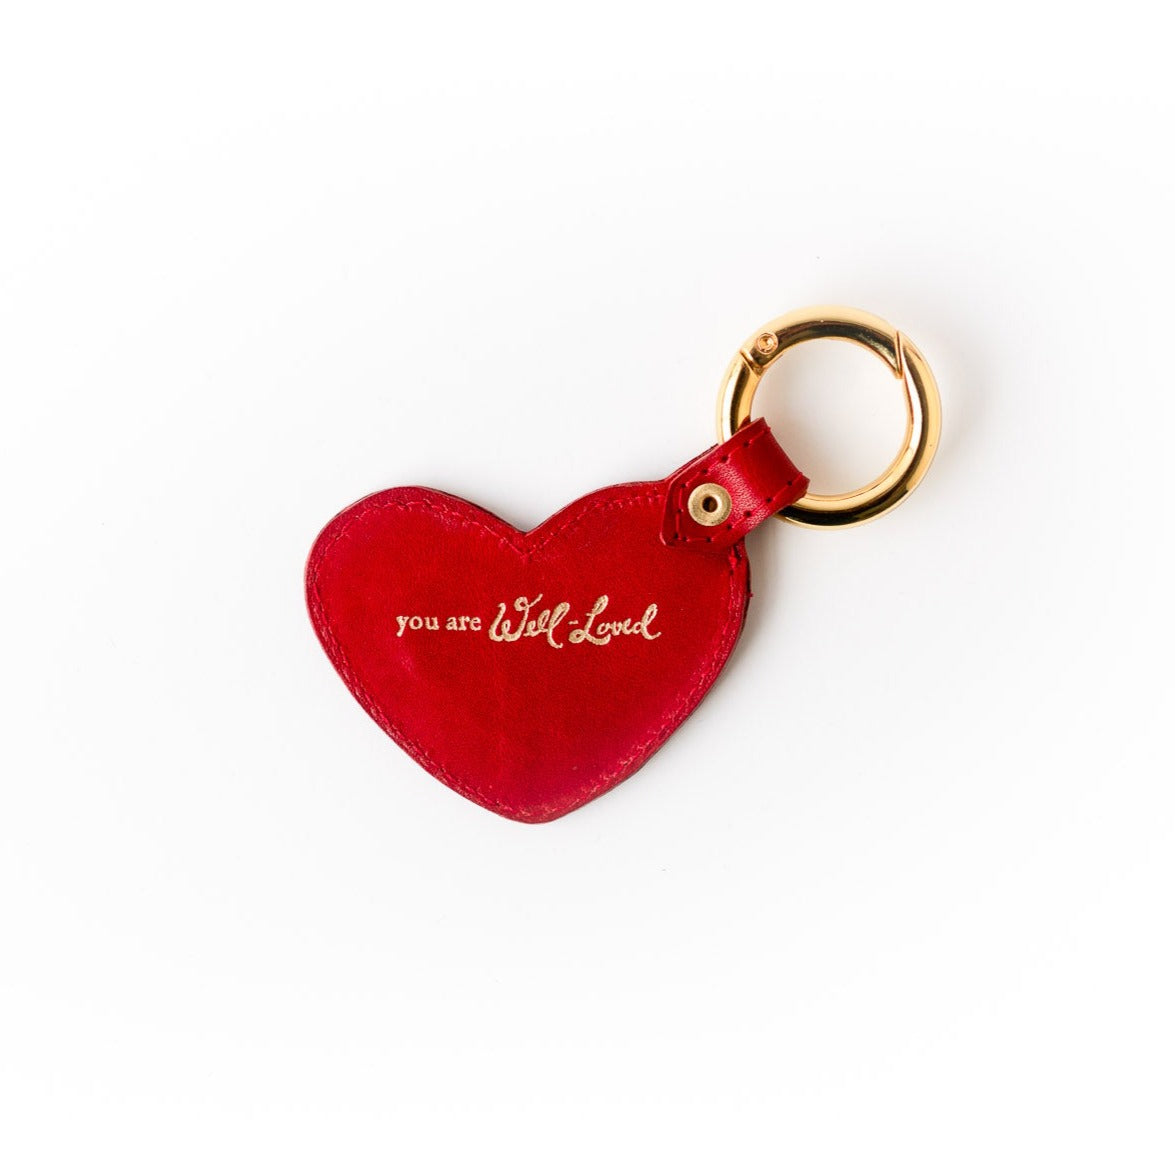 Well-Loved Heart Key Ring